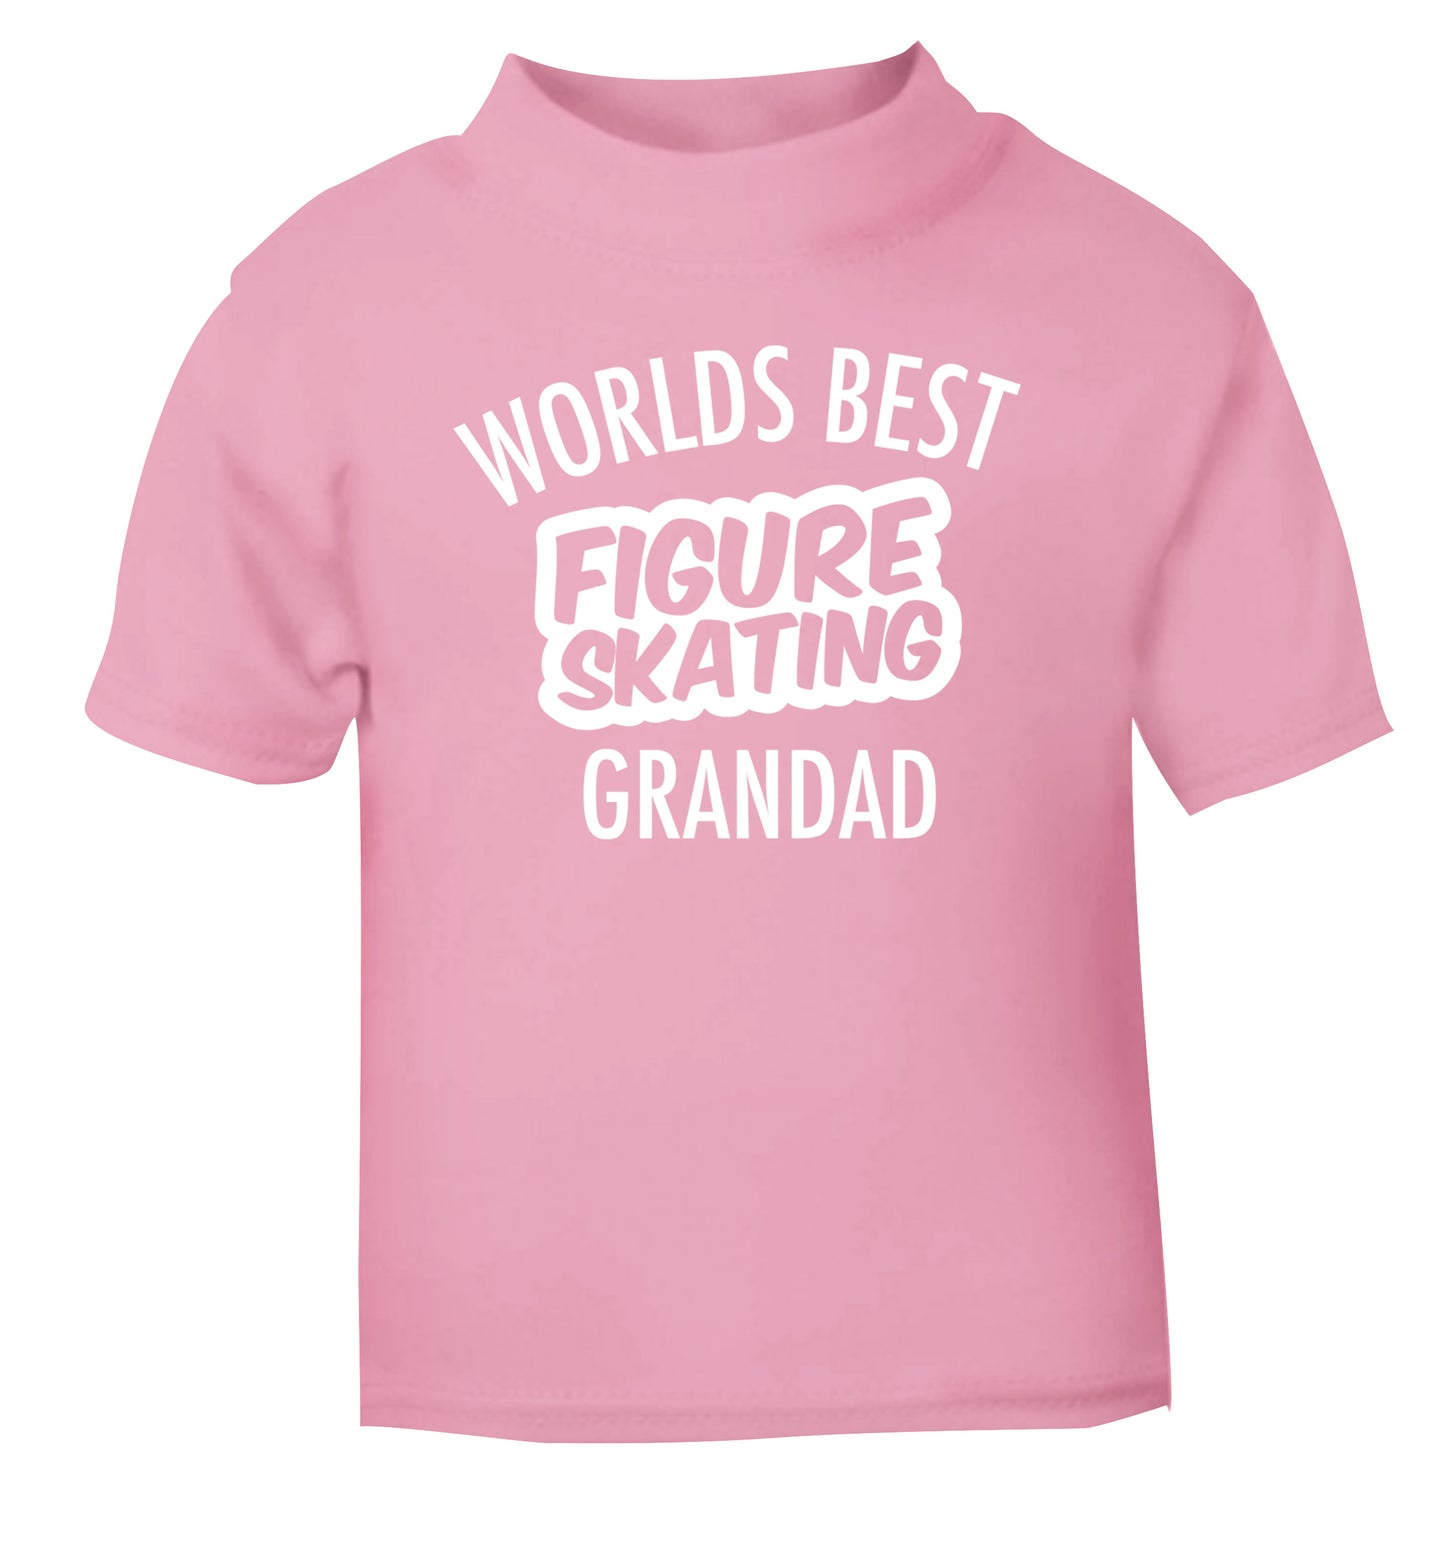 Worlds best figure skating grandad light pink Baby Toddler Tshirt 2 Years